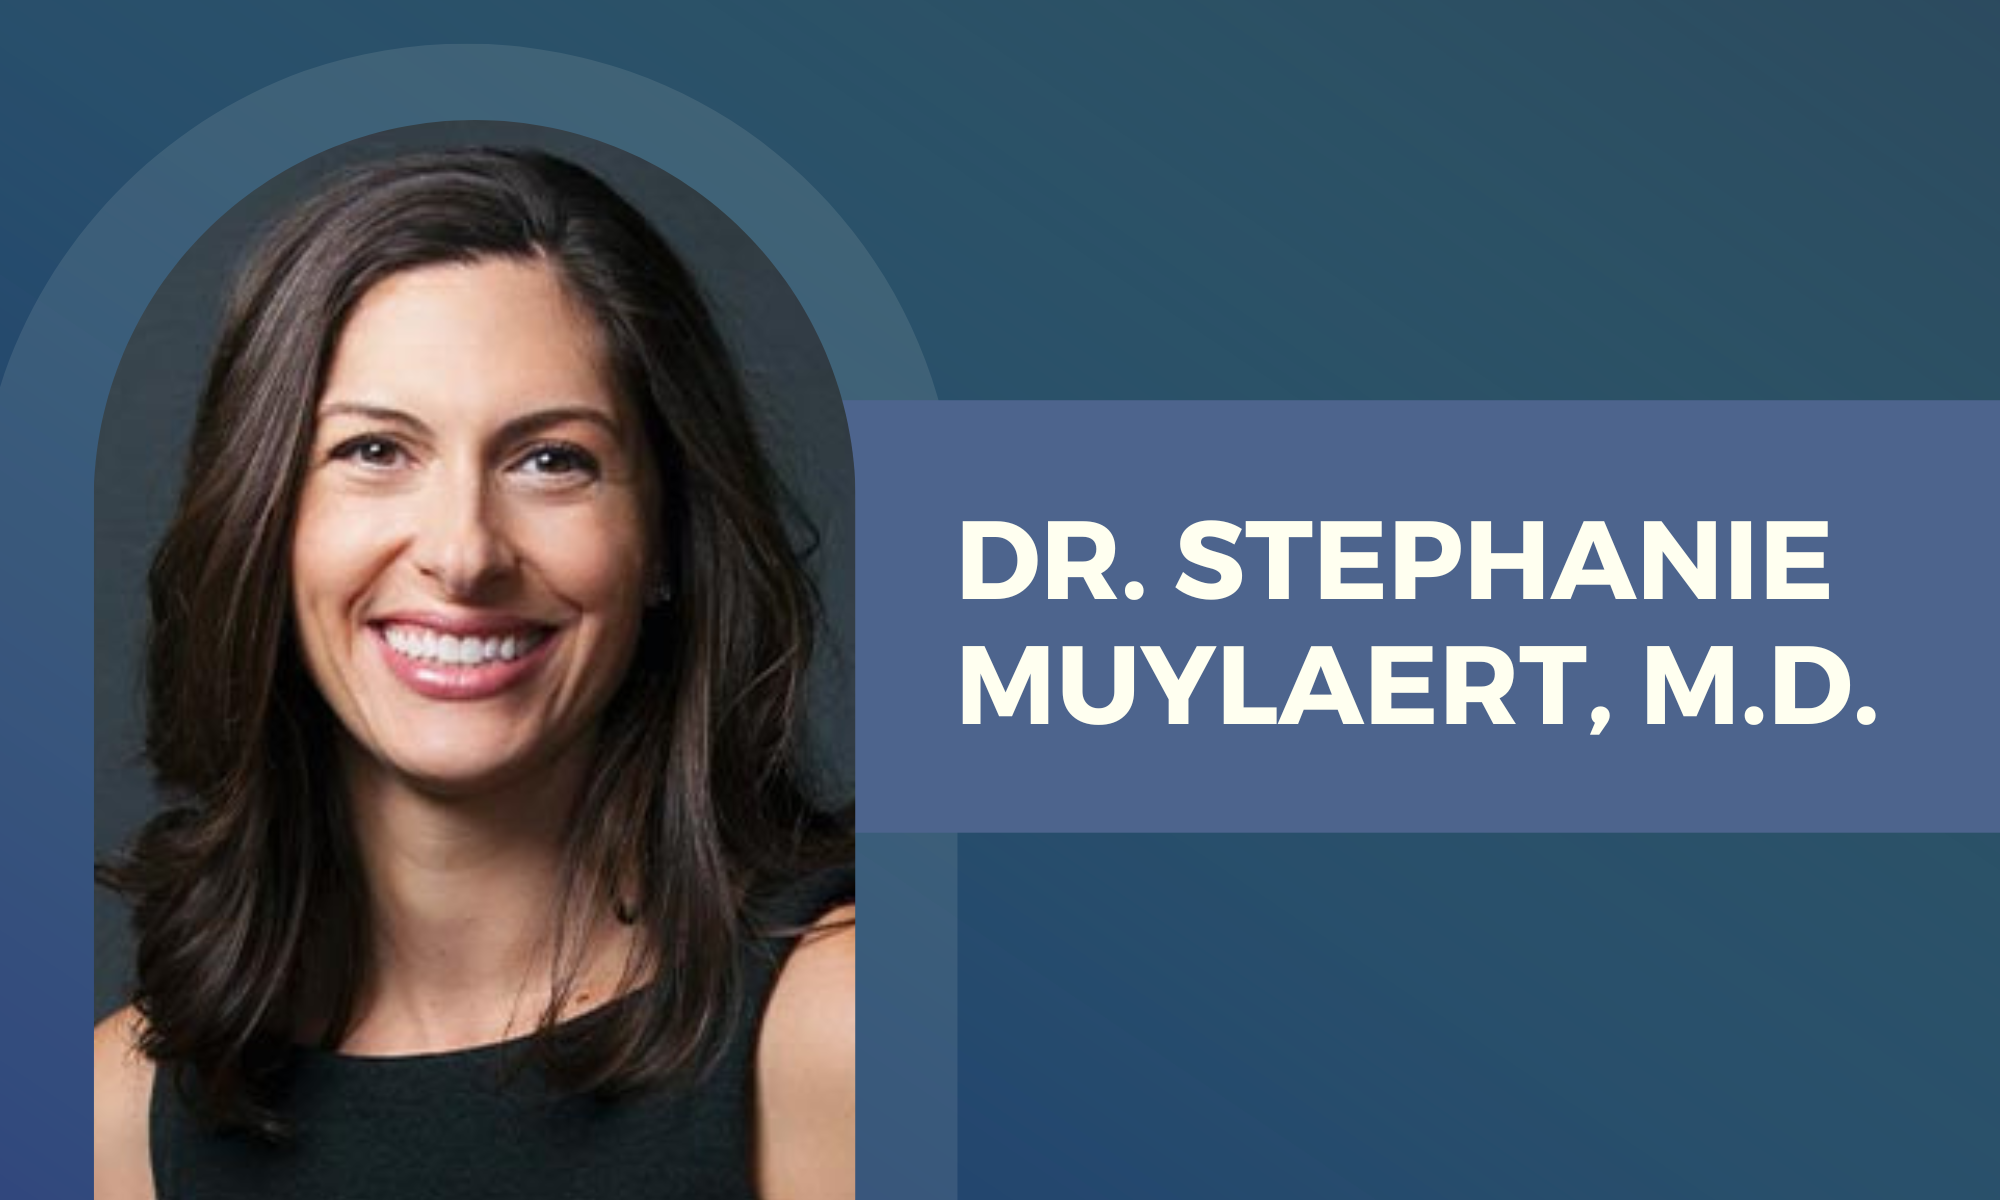 
Welcoming Dr. Stephanie Muylaert